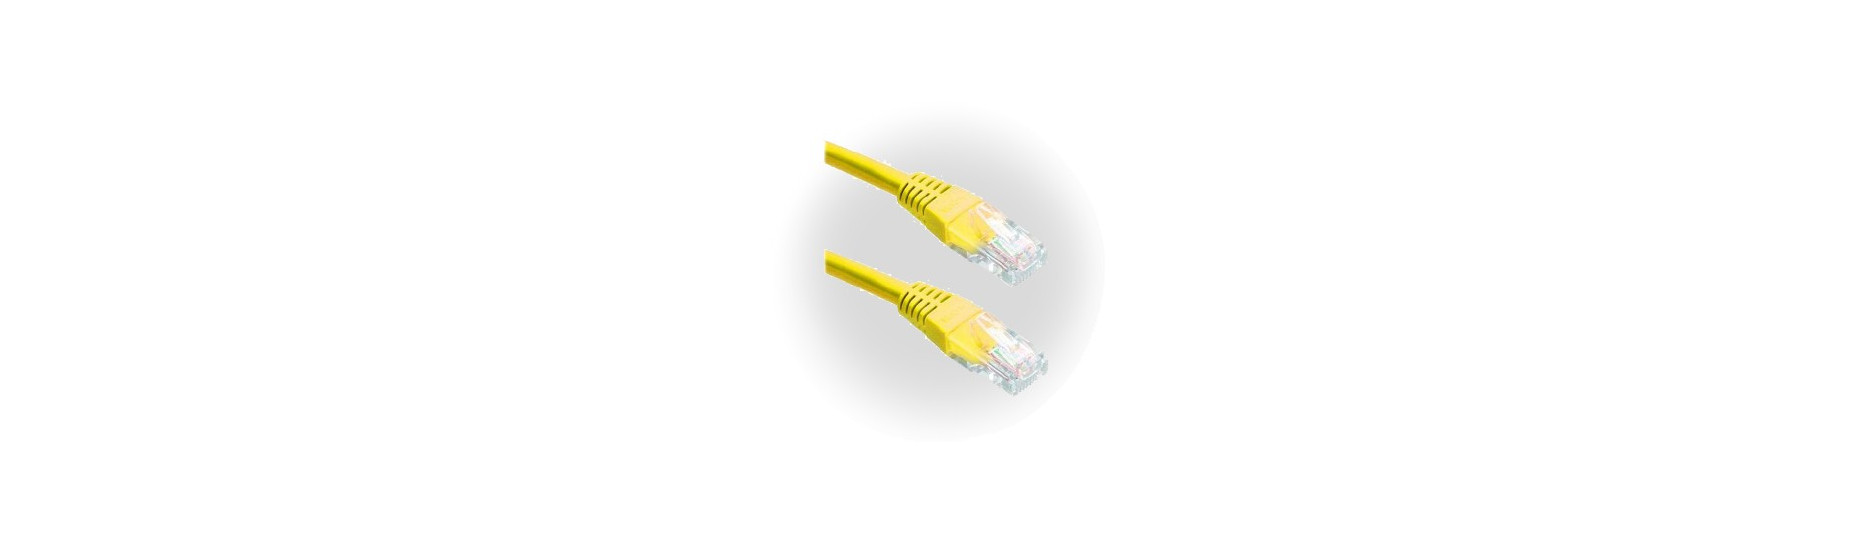 UTP data cables